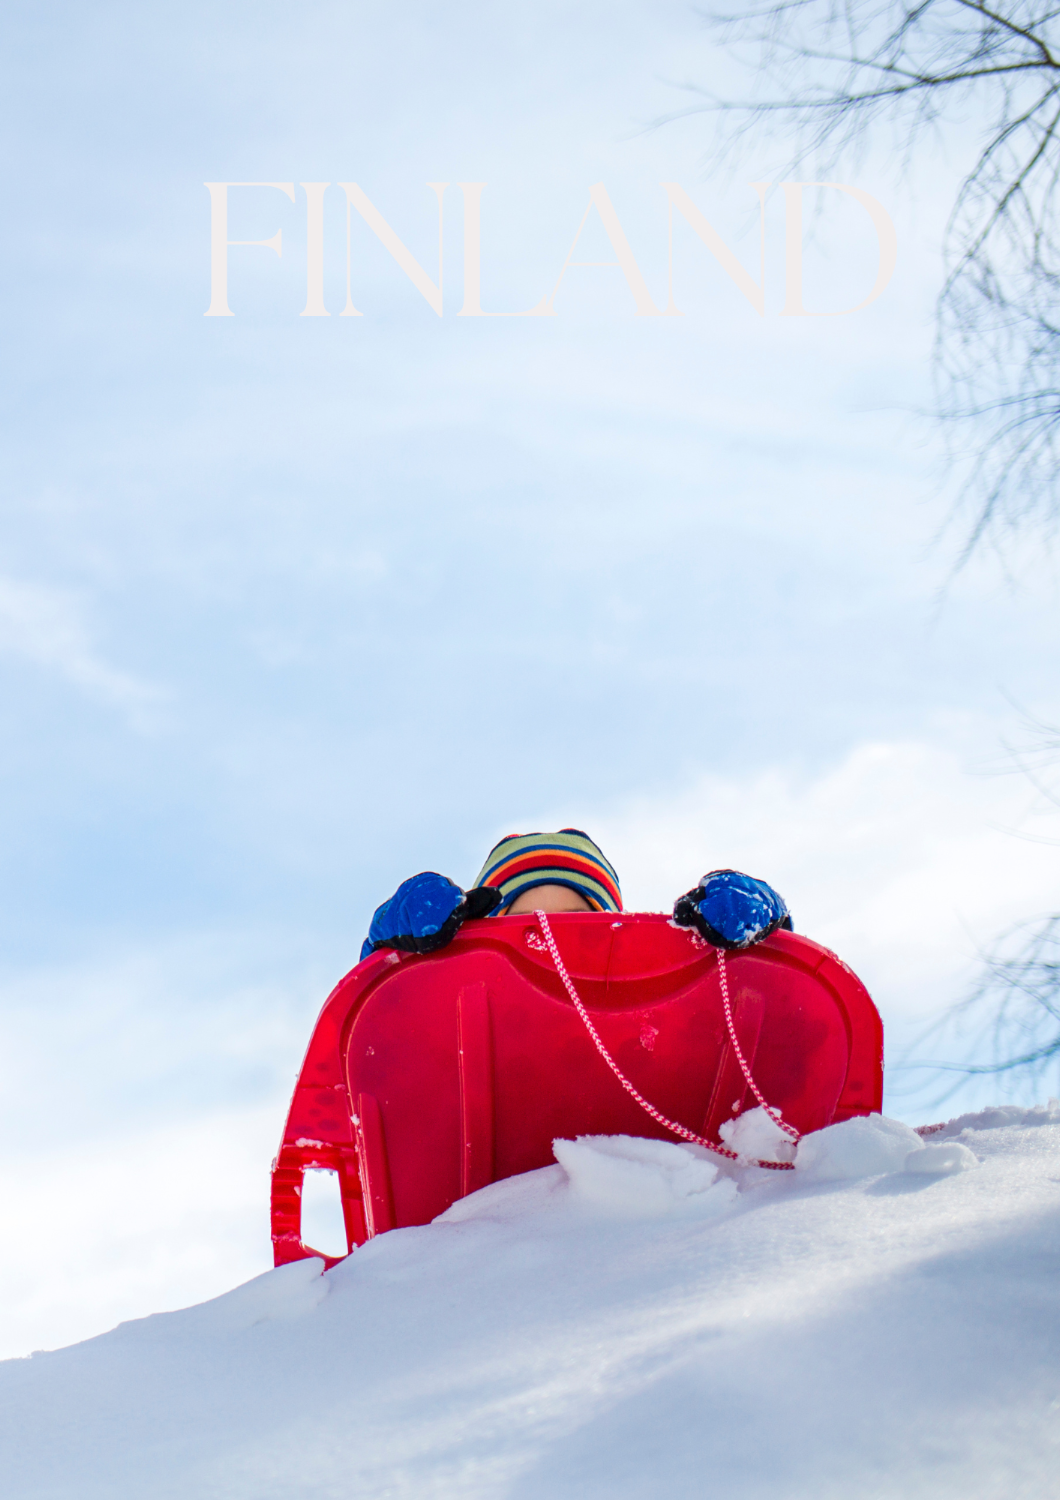 Finnish Winter and Sledding